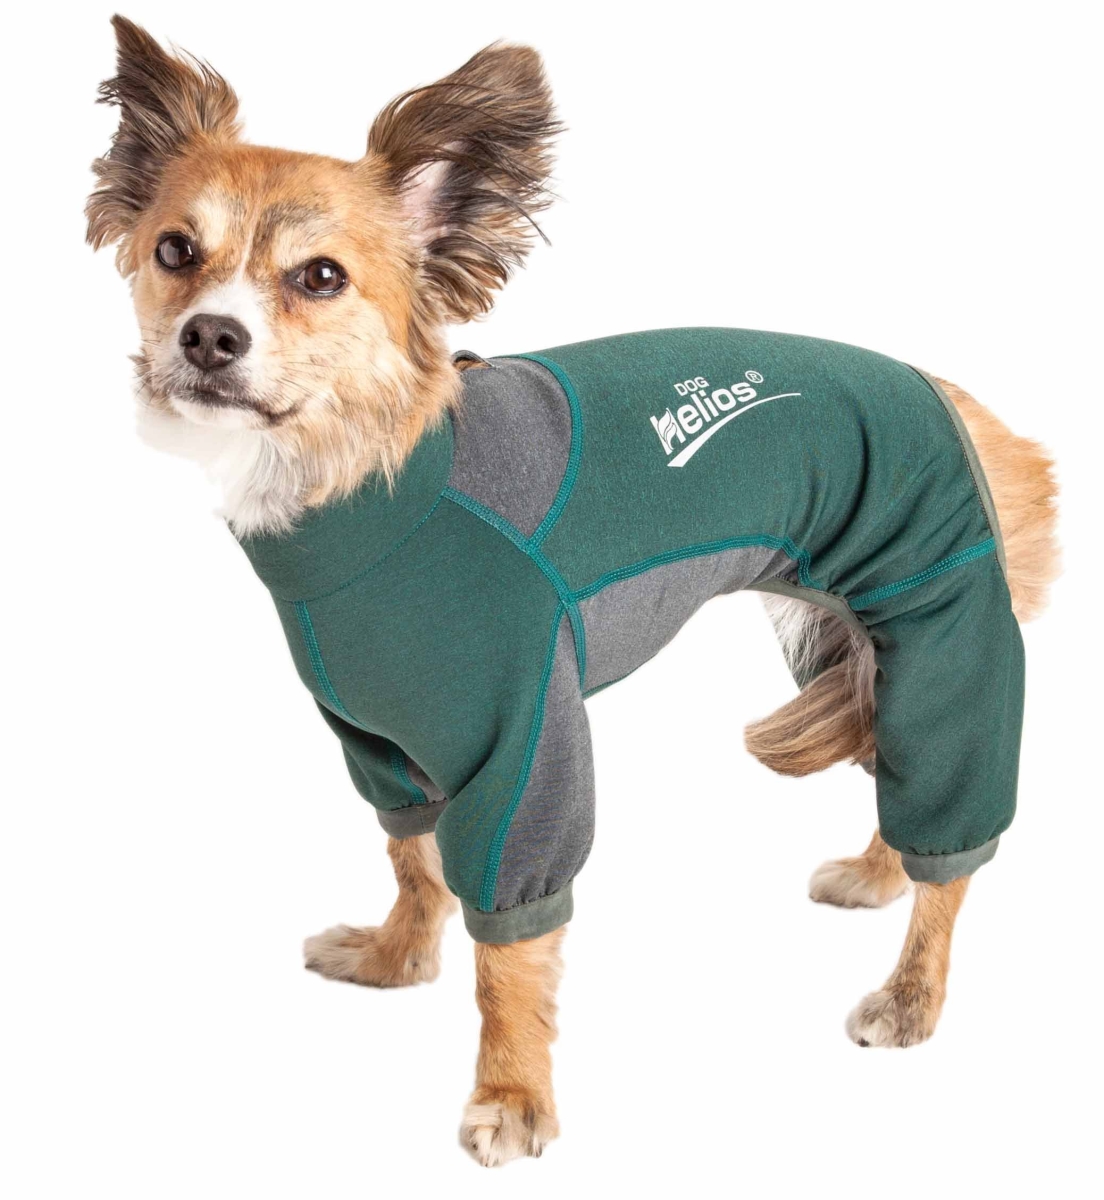 Yghl8gnmd Rufflex 4-way-stretch Breathable Full Bodied Performance Dog Warmup Track Suit - Green & Grey, Medium